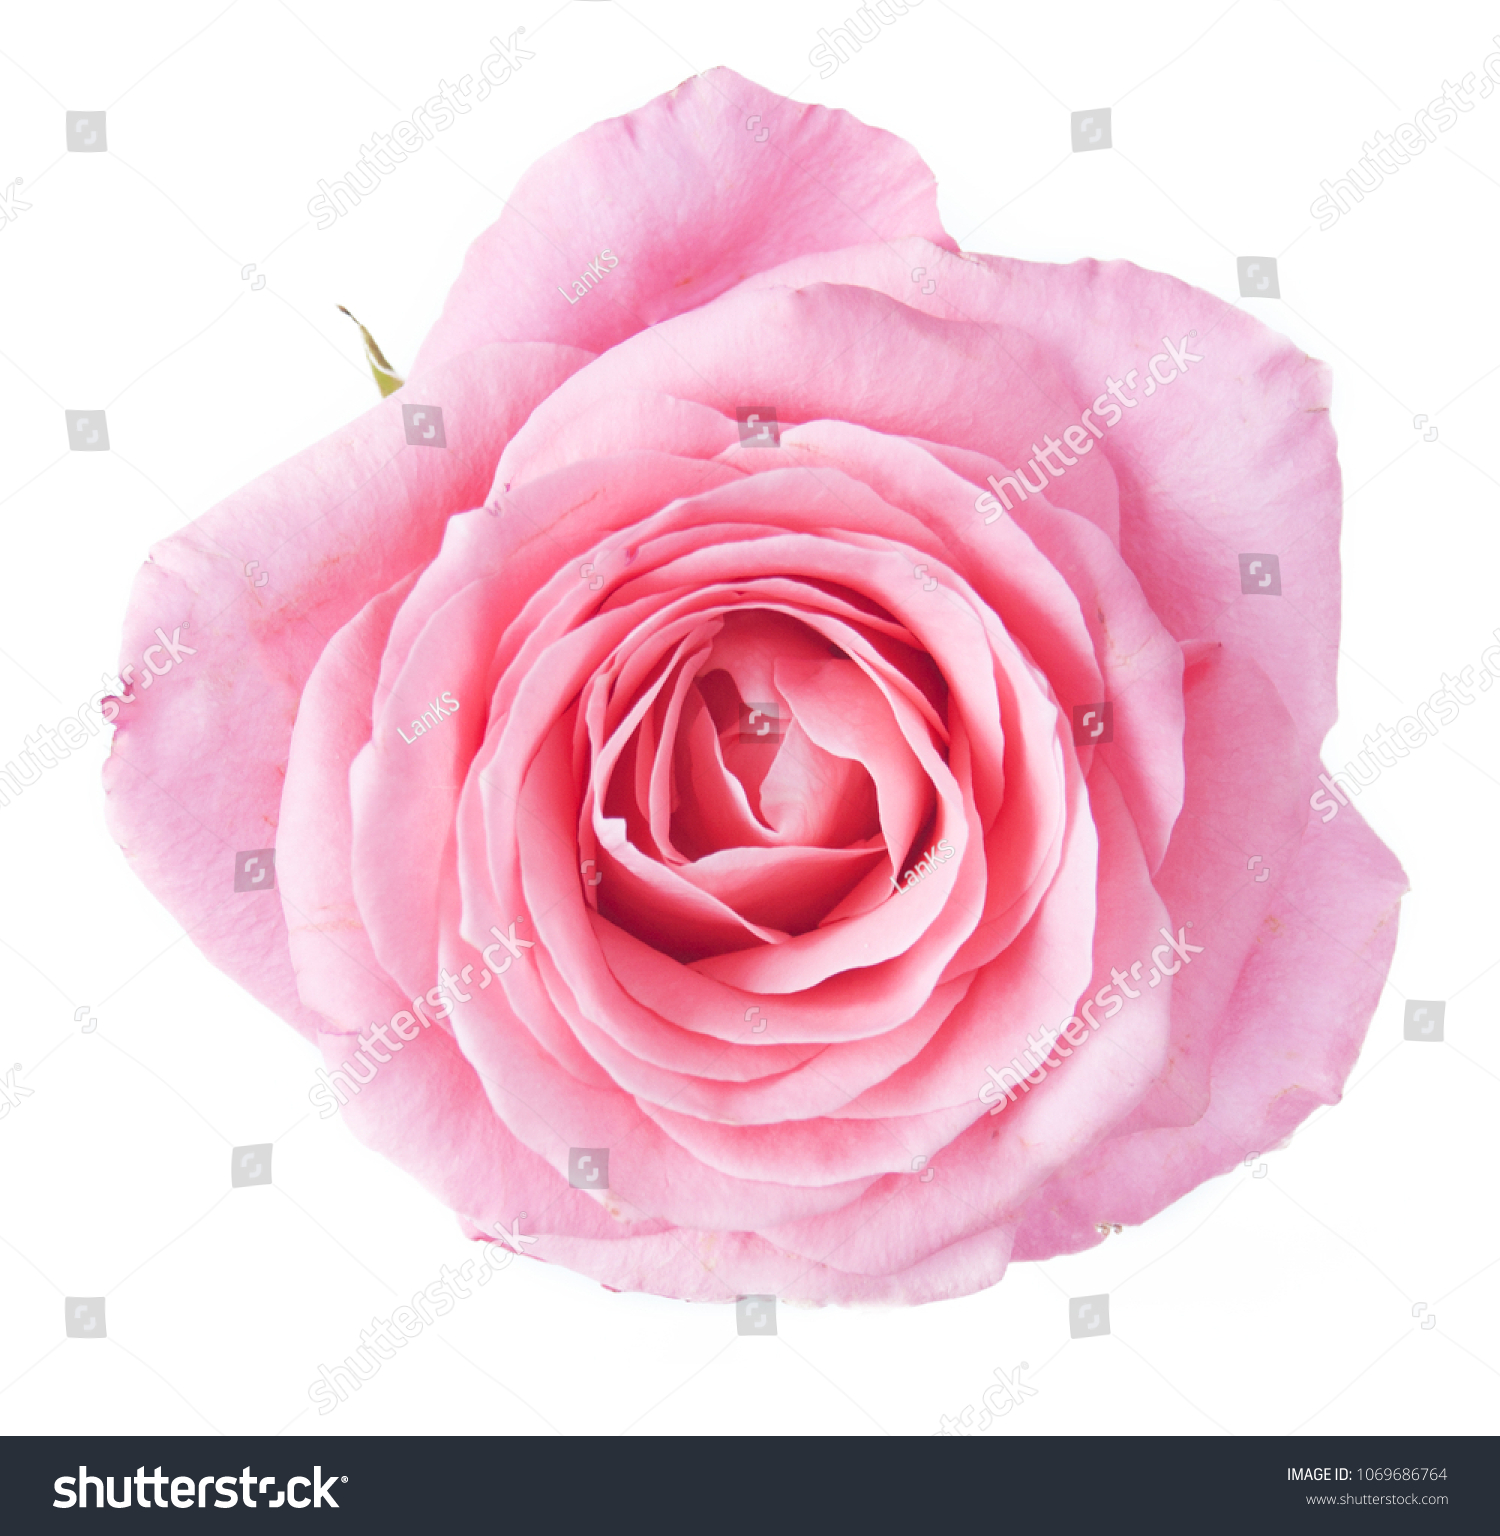 Rose flower isolated on white background #1069686764